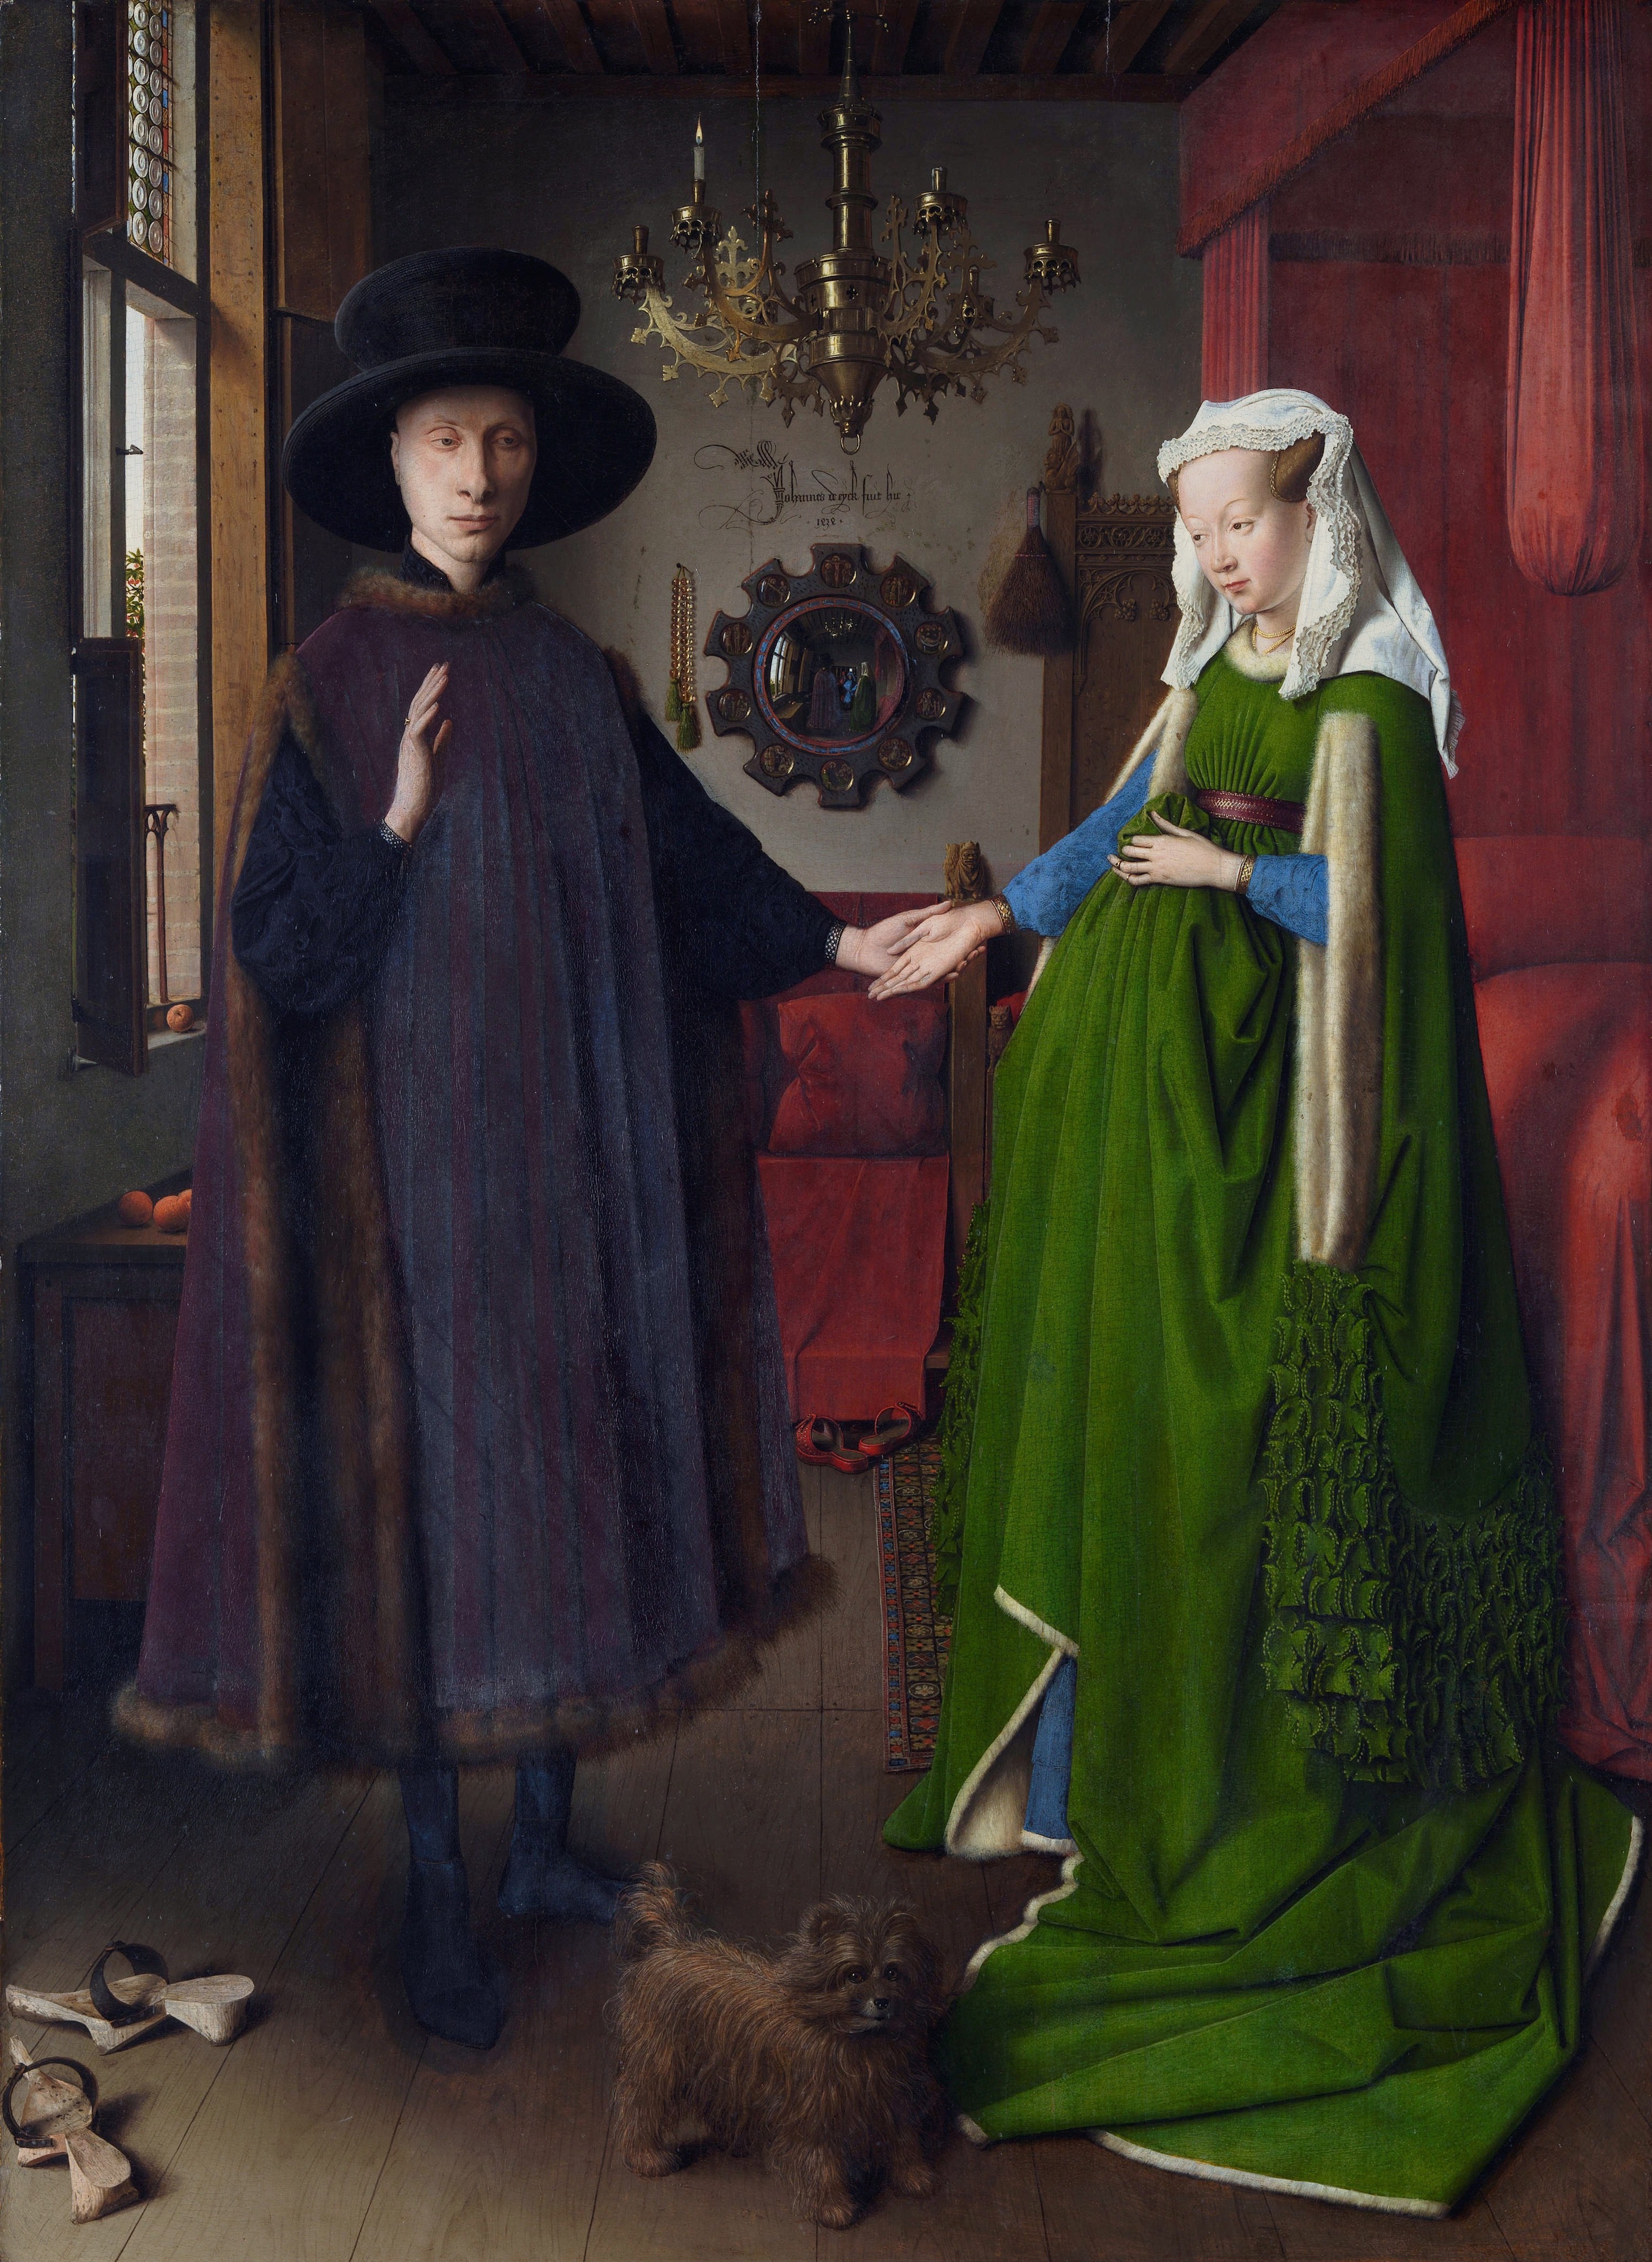 Giovanni Arnolfini and His Wife Giovanna Cenami by Jan van Eyck - 1434 - 82 × 59.5 cm National Gallery